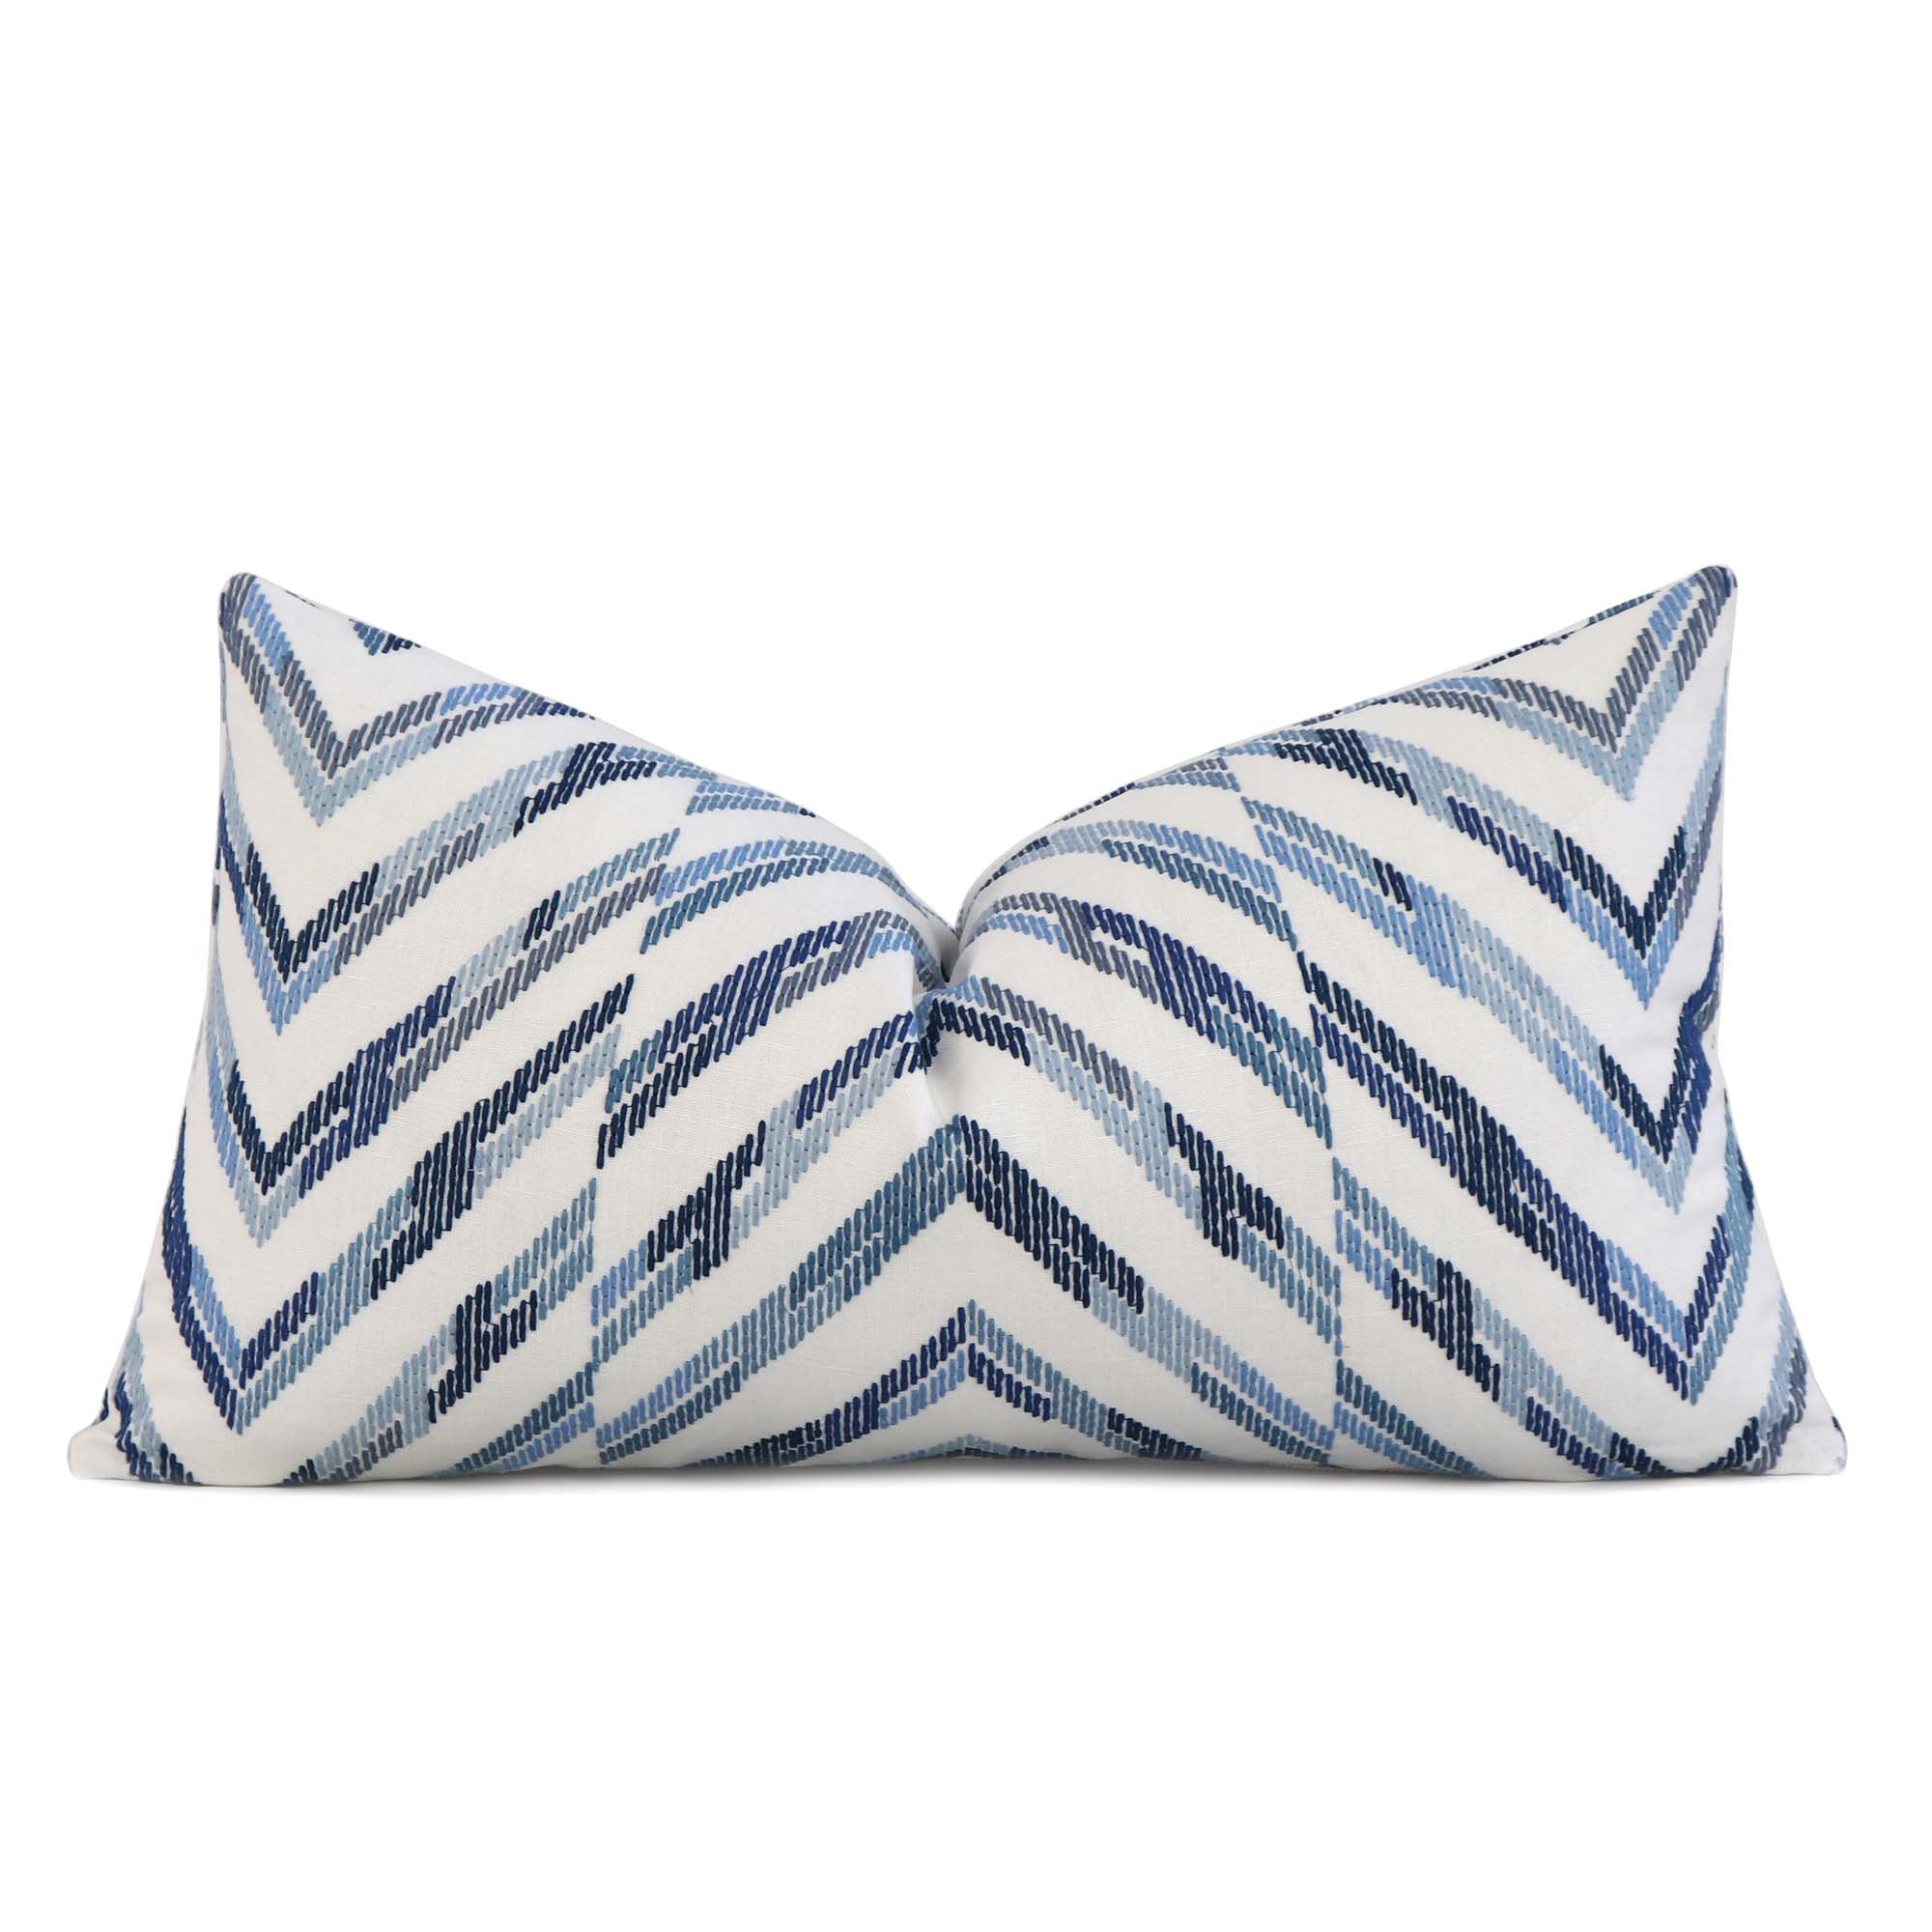 Thibaut Hamilton Embroidered Textured Blue and White Chevron Geometric Designer Luxury Lumbar Throw Pillow Cover